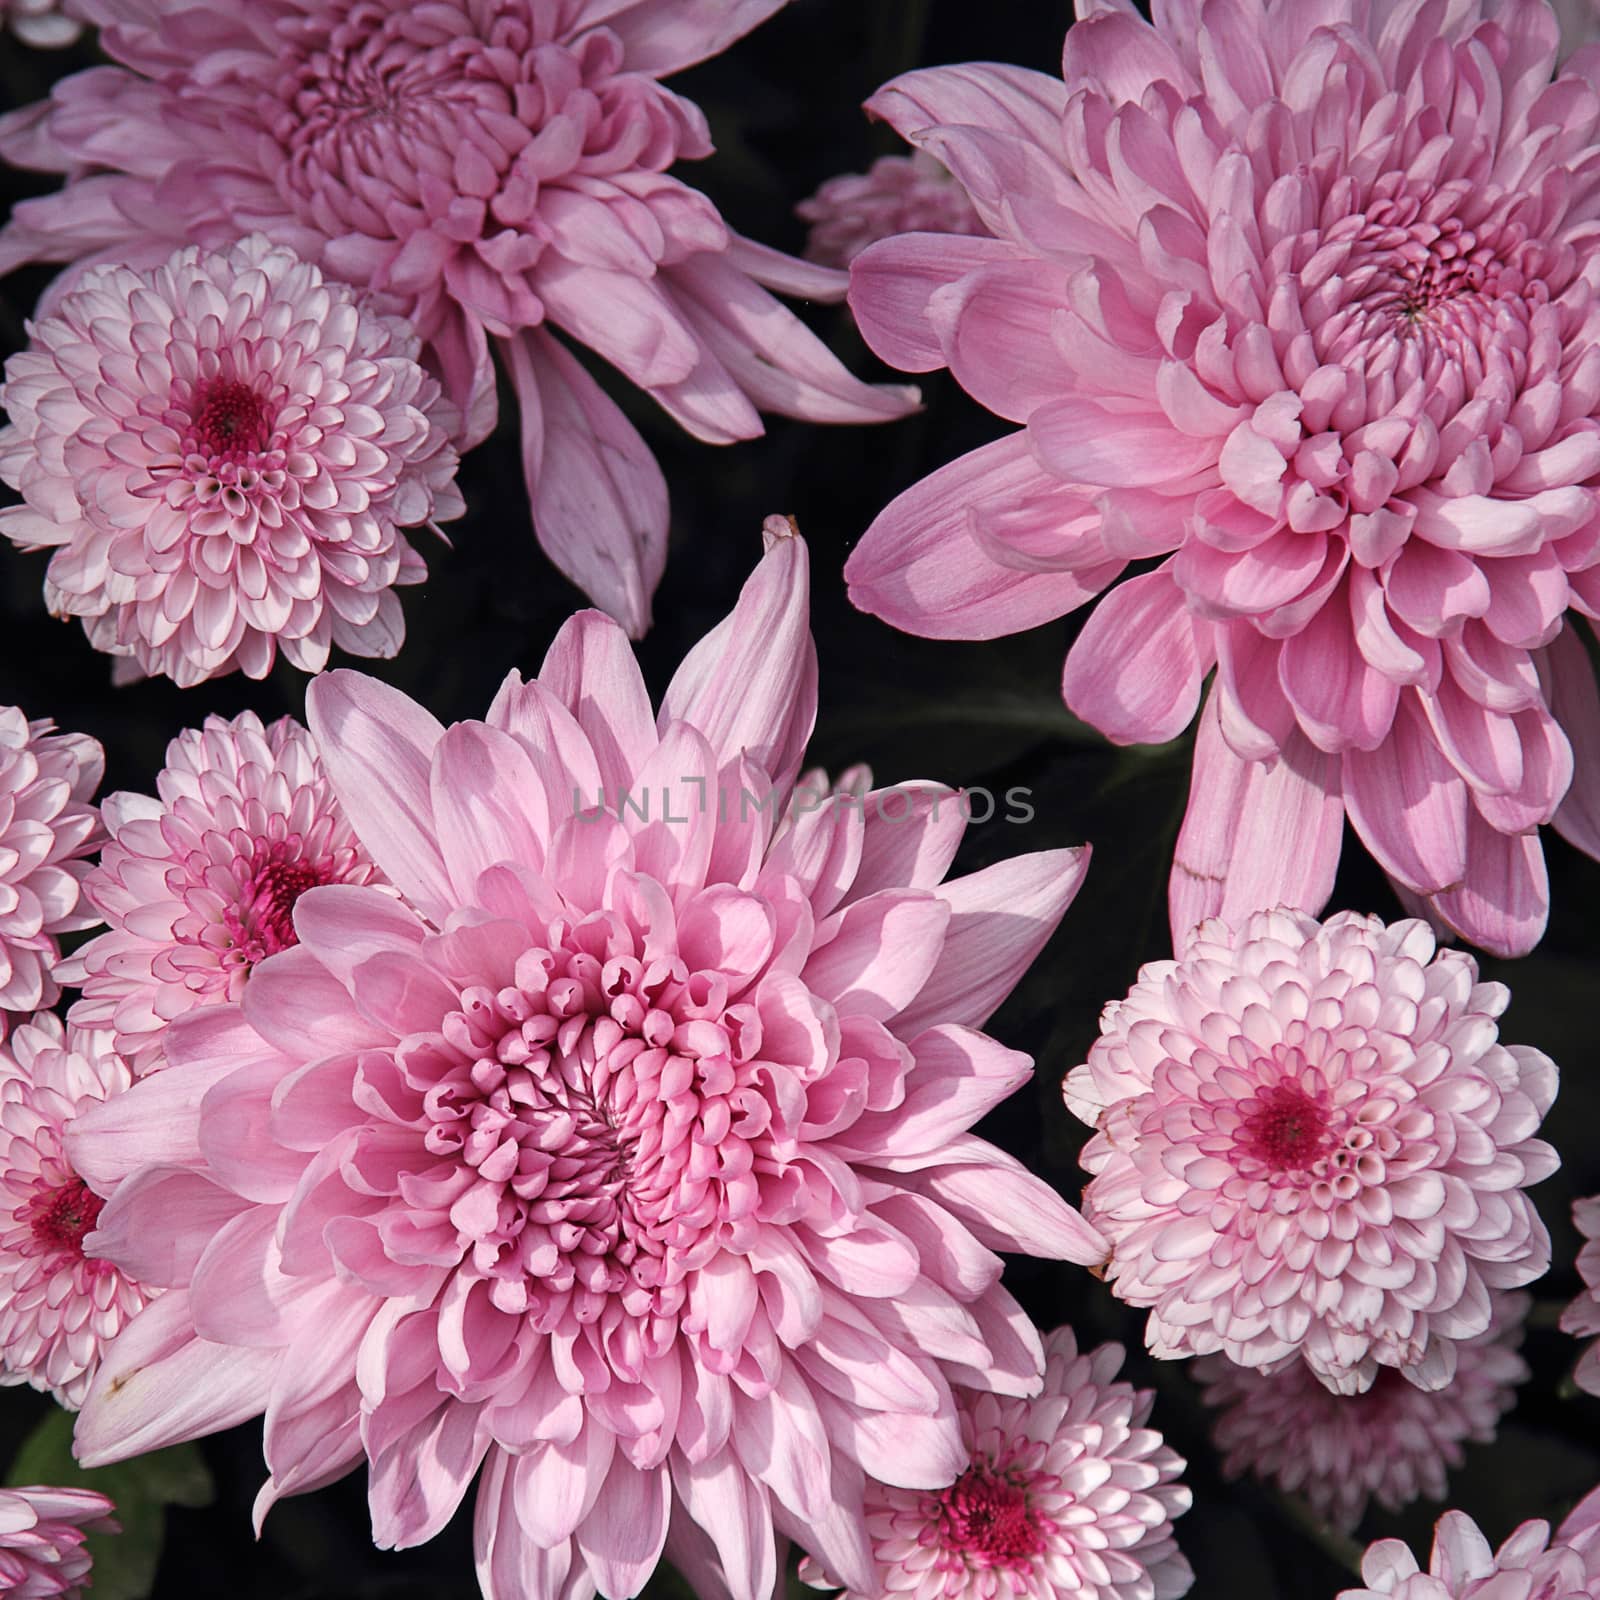 Background of the beautiful pink chrysanthemum flower